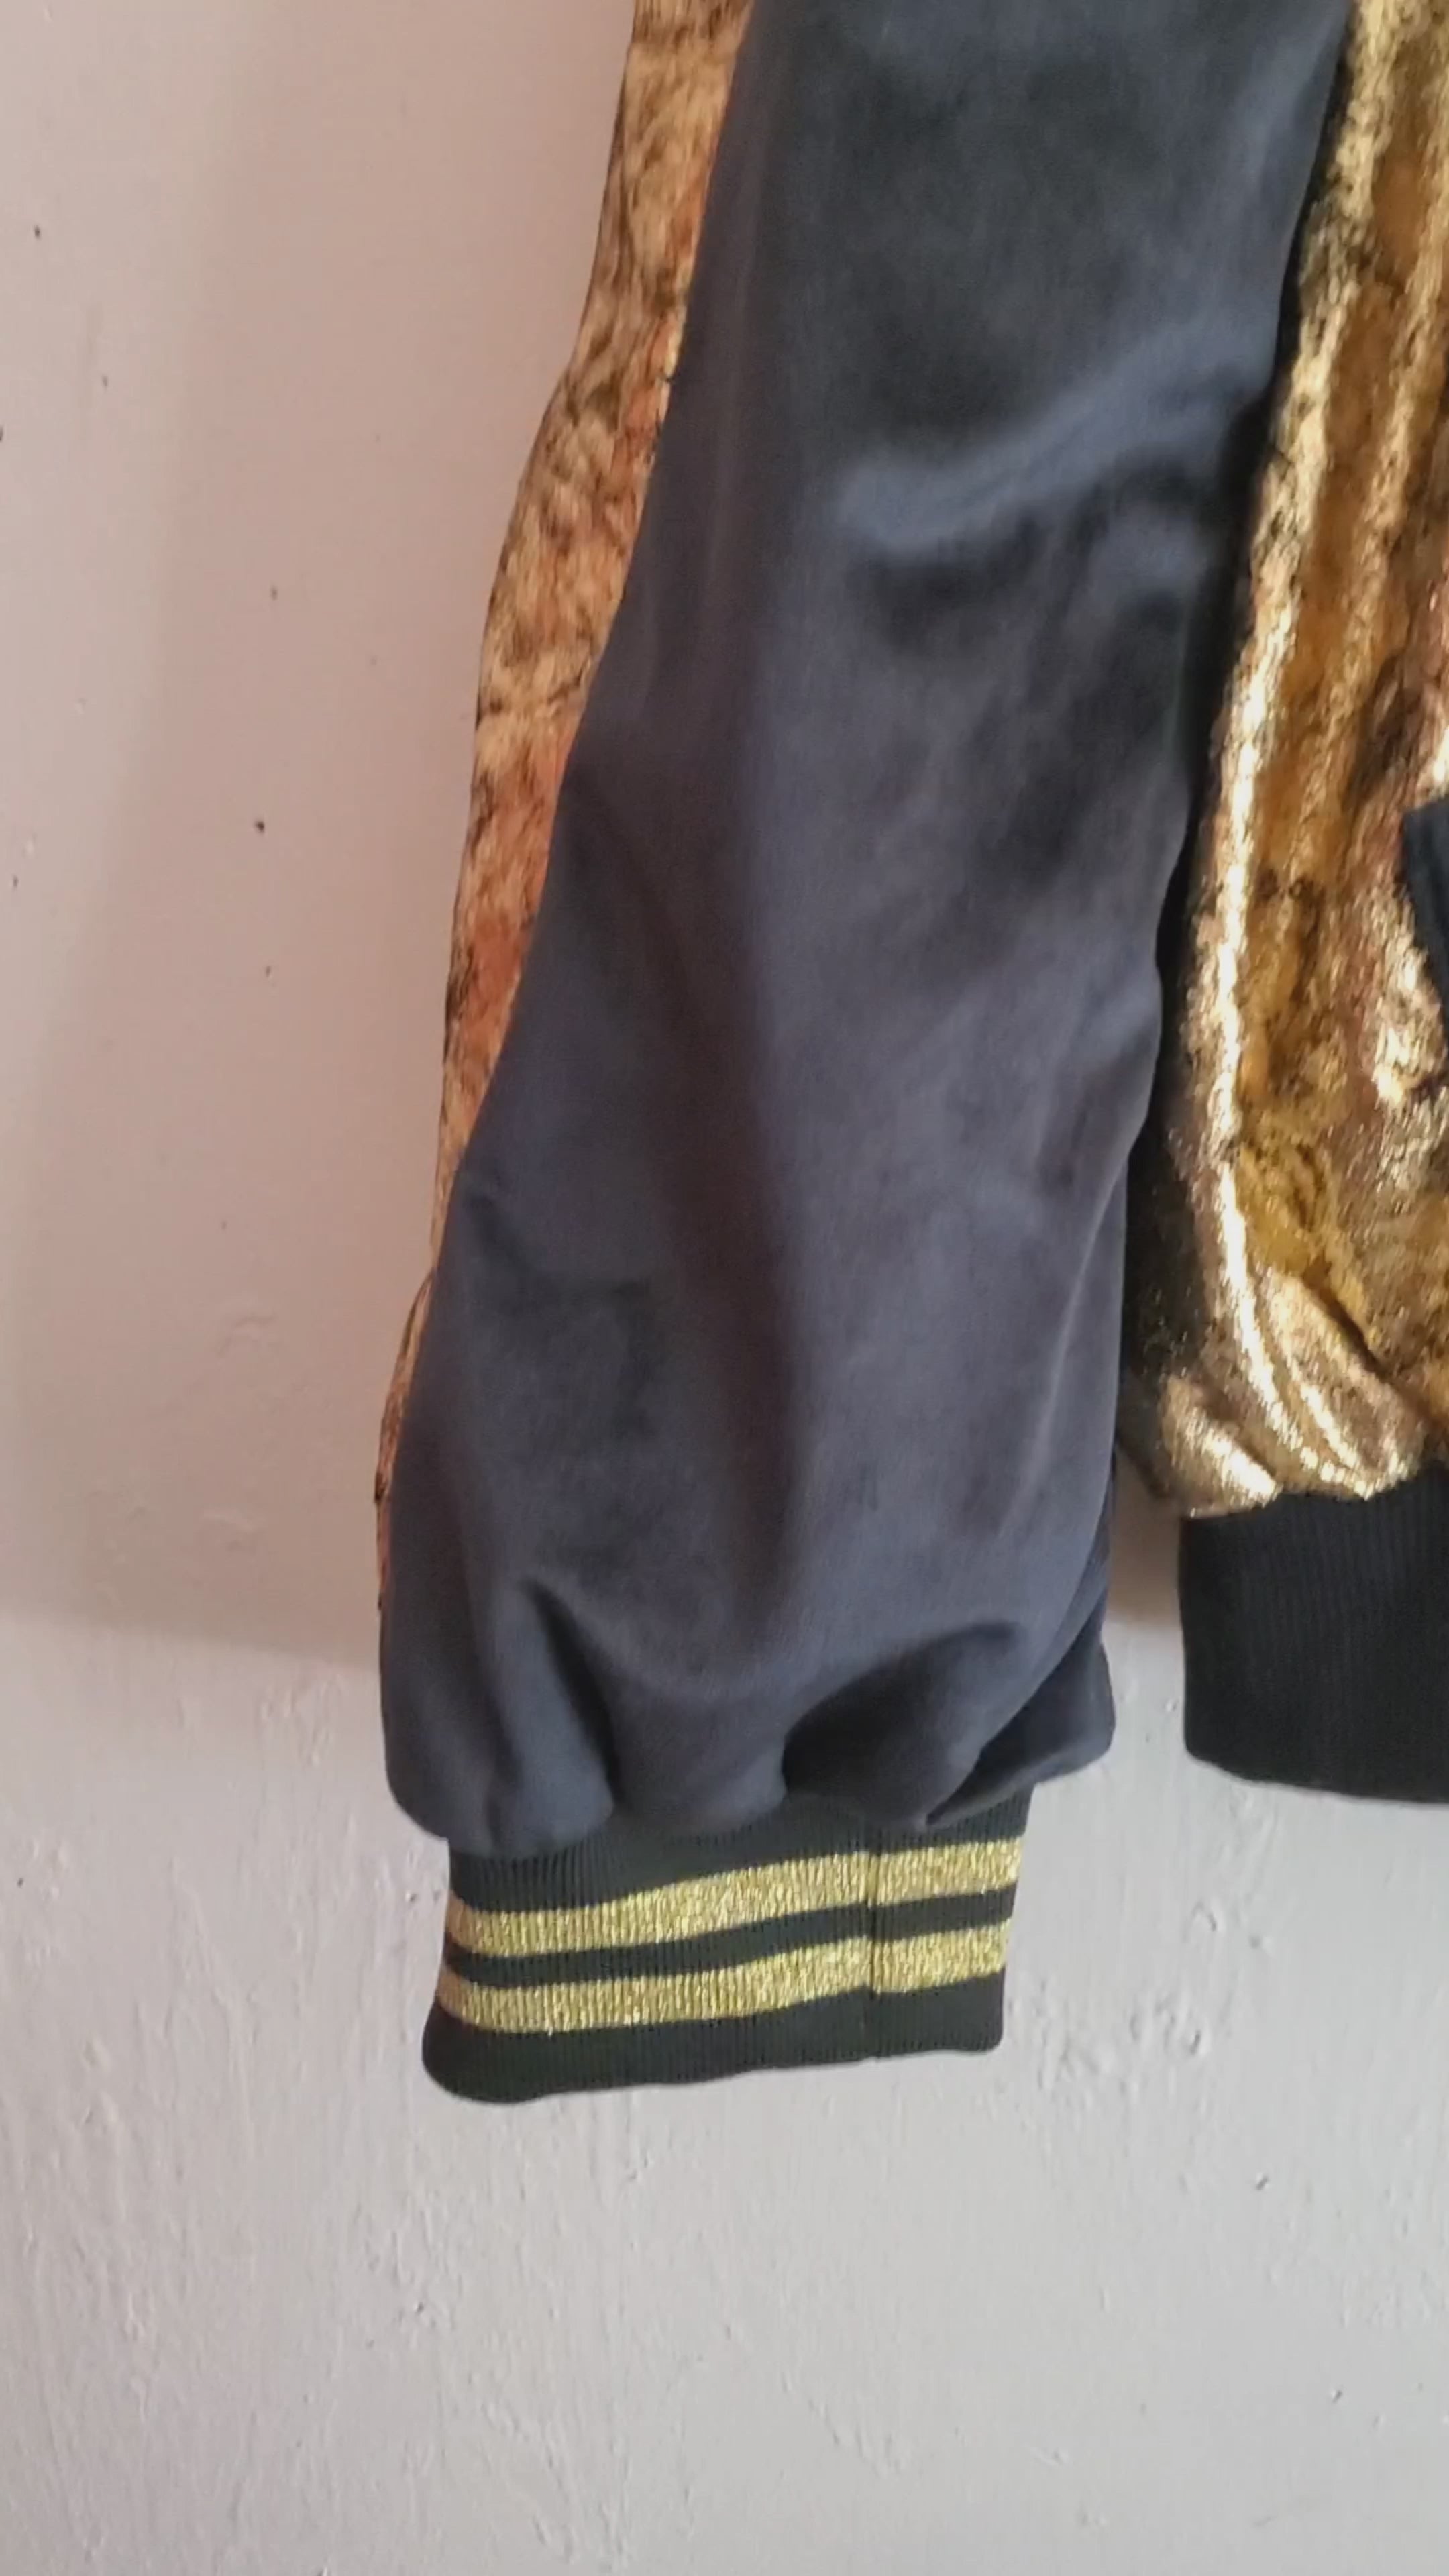 MIDAS-Black and gold velvet bomber jacket with hidden pocket dolman sleeves